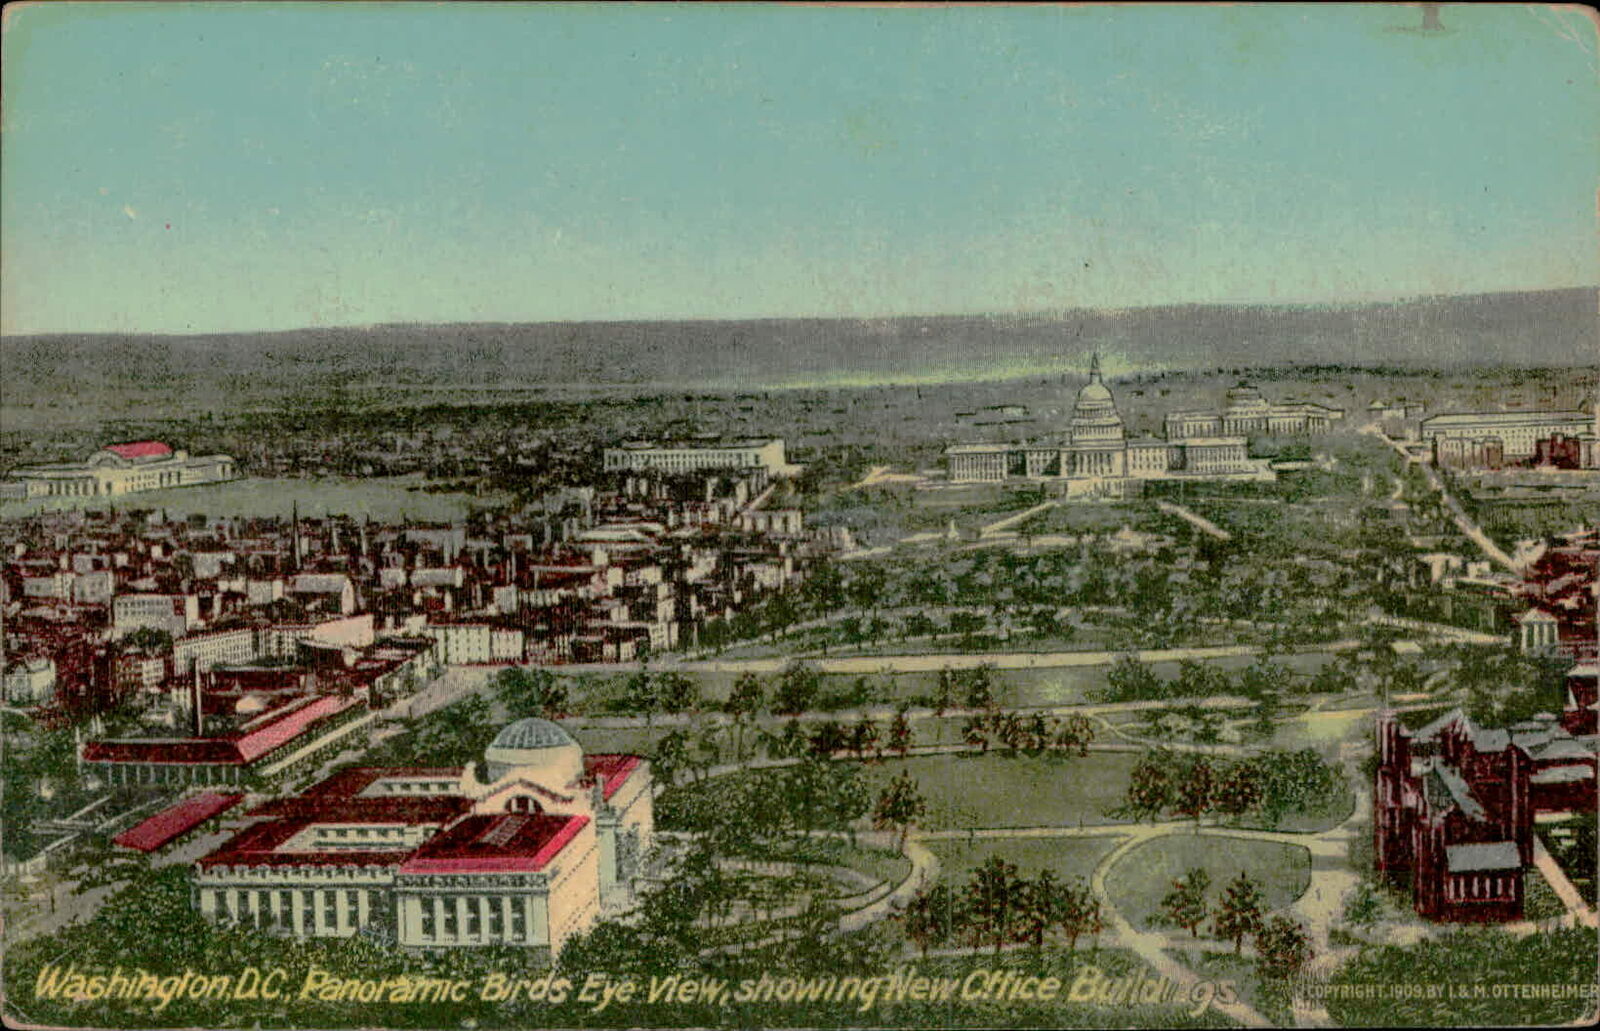 Postcard: Washington DC, Panoramic Birds Eye